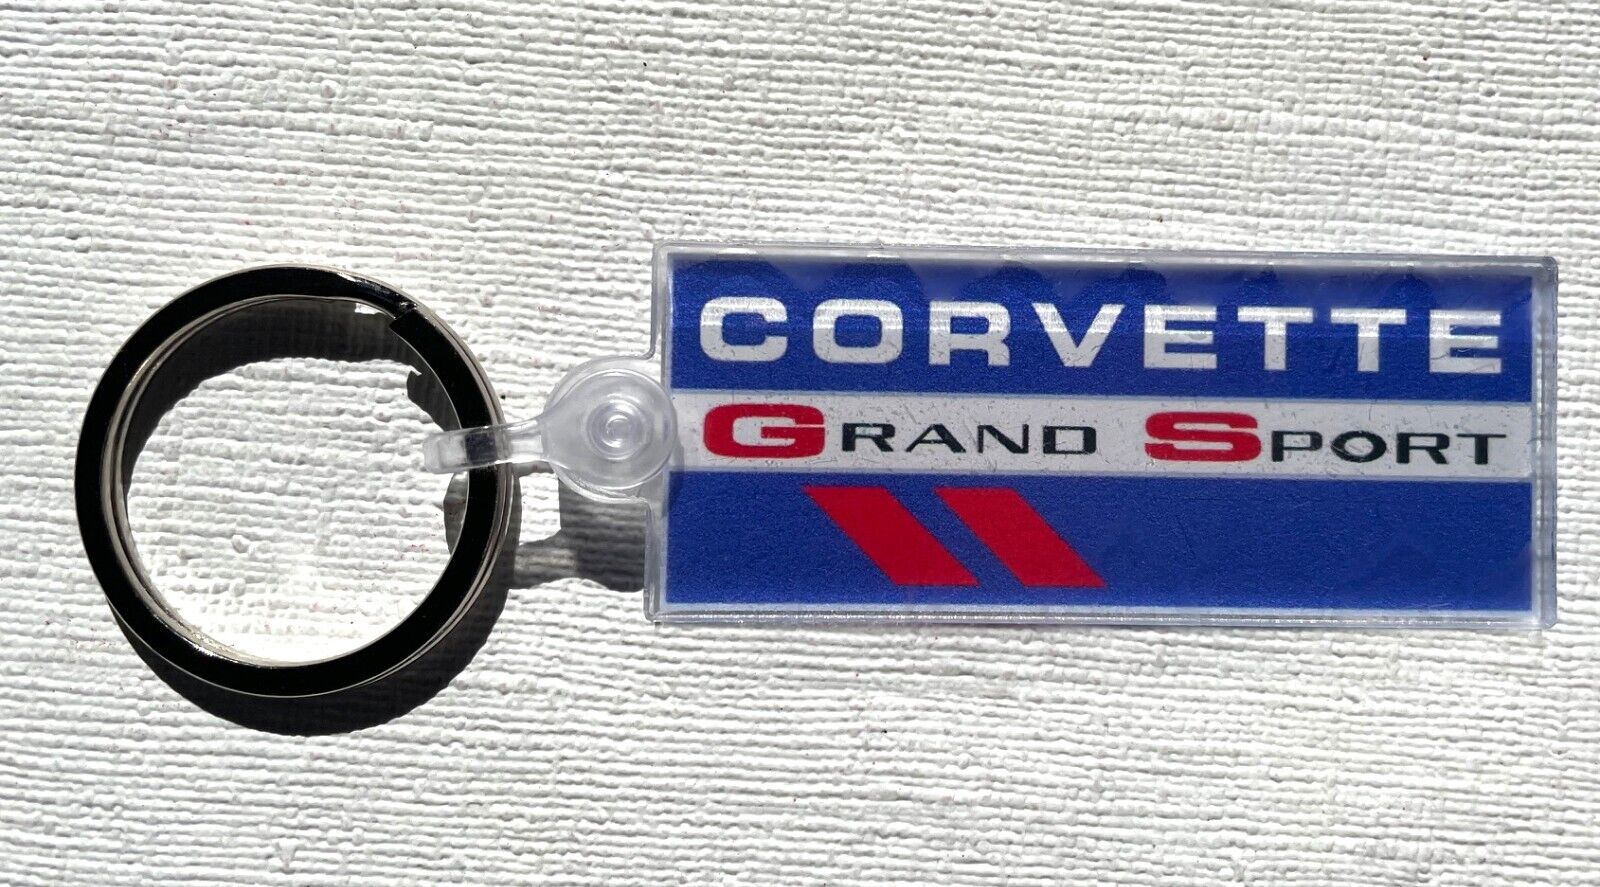 Grand Sport Corvette Key Ring, Key Chain - Ships FREE in the USA